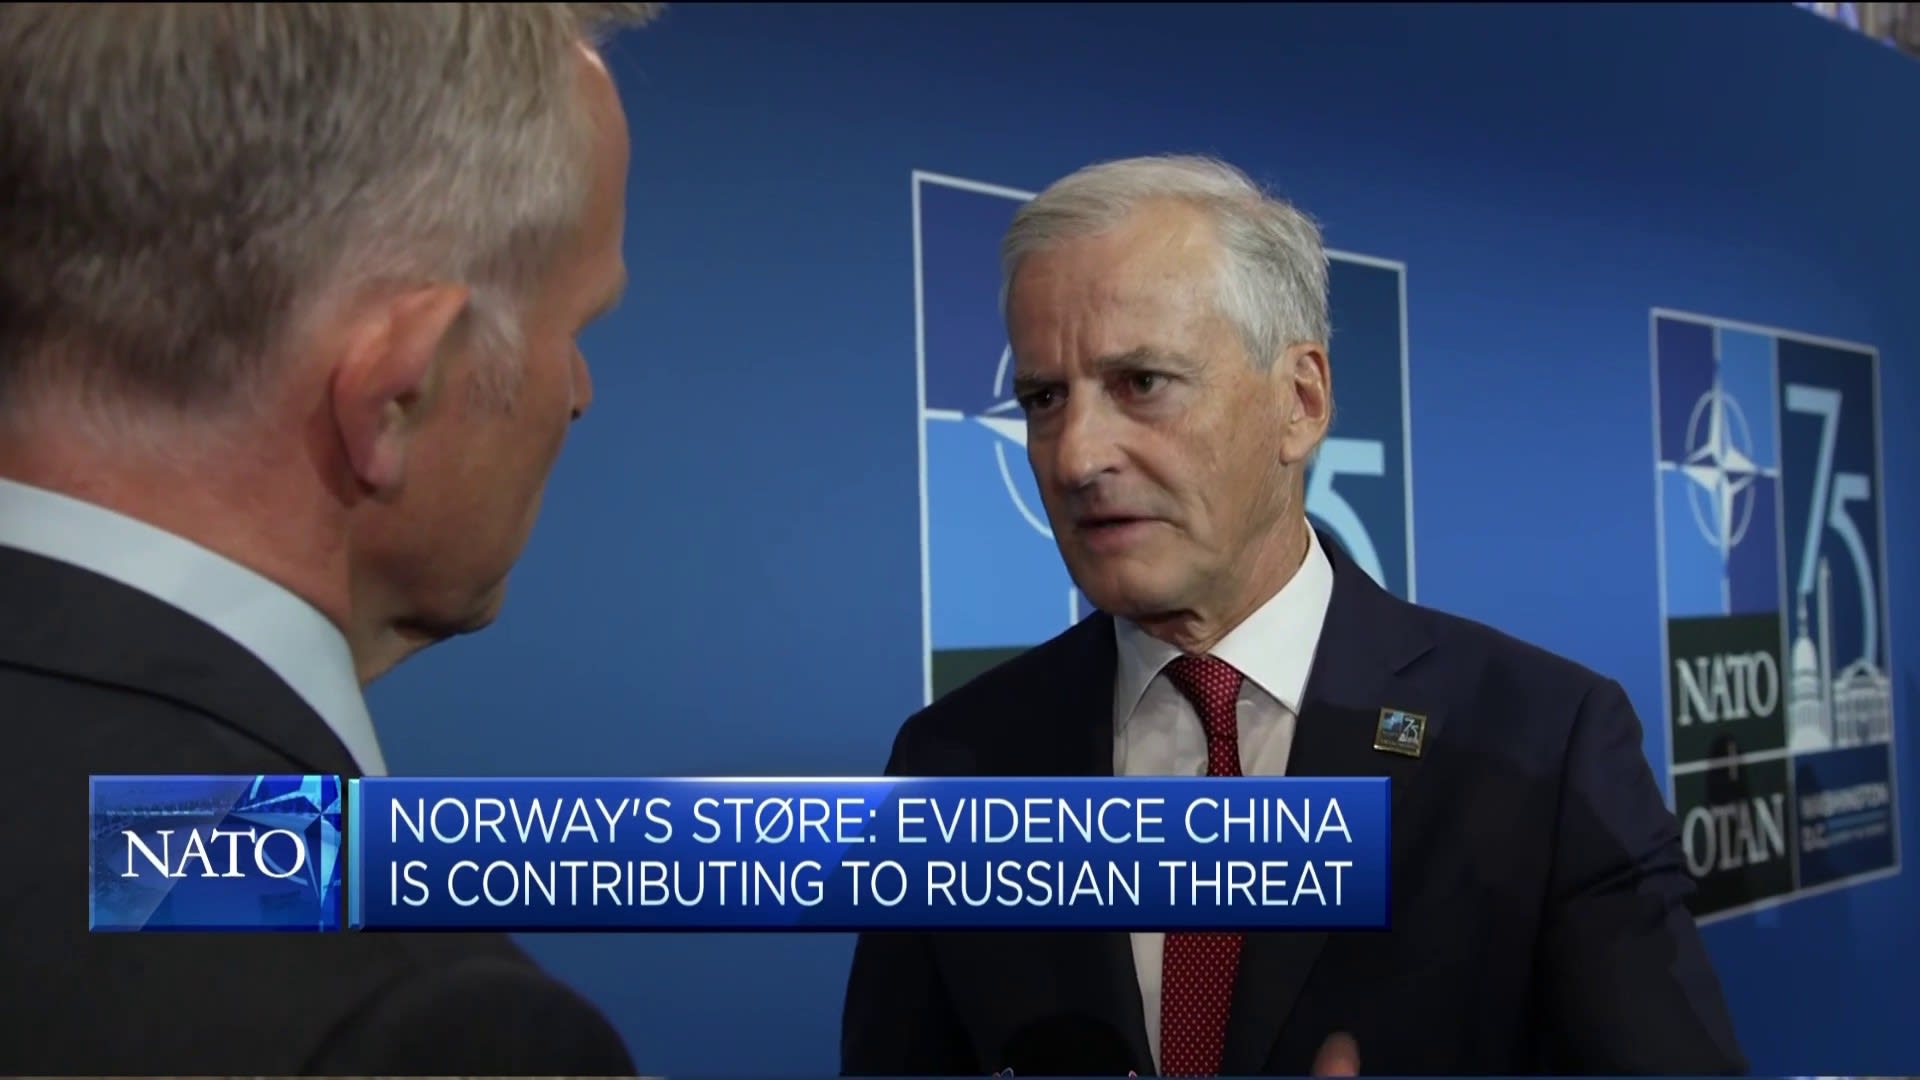 'We should not be naïve' when dealing with China, says Norwegian PM Jonas Gahr Støre